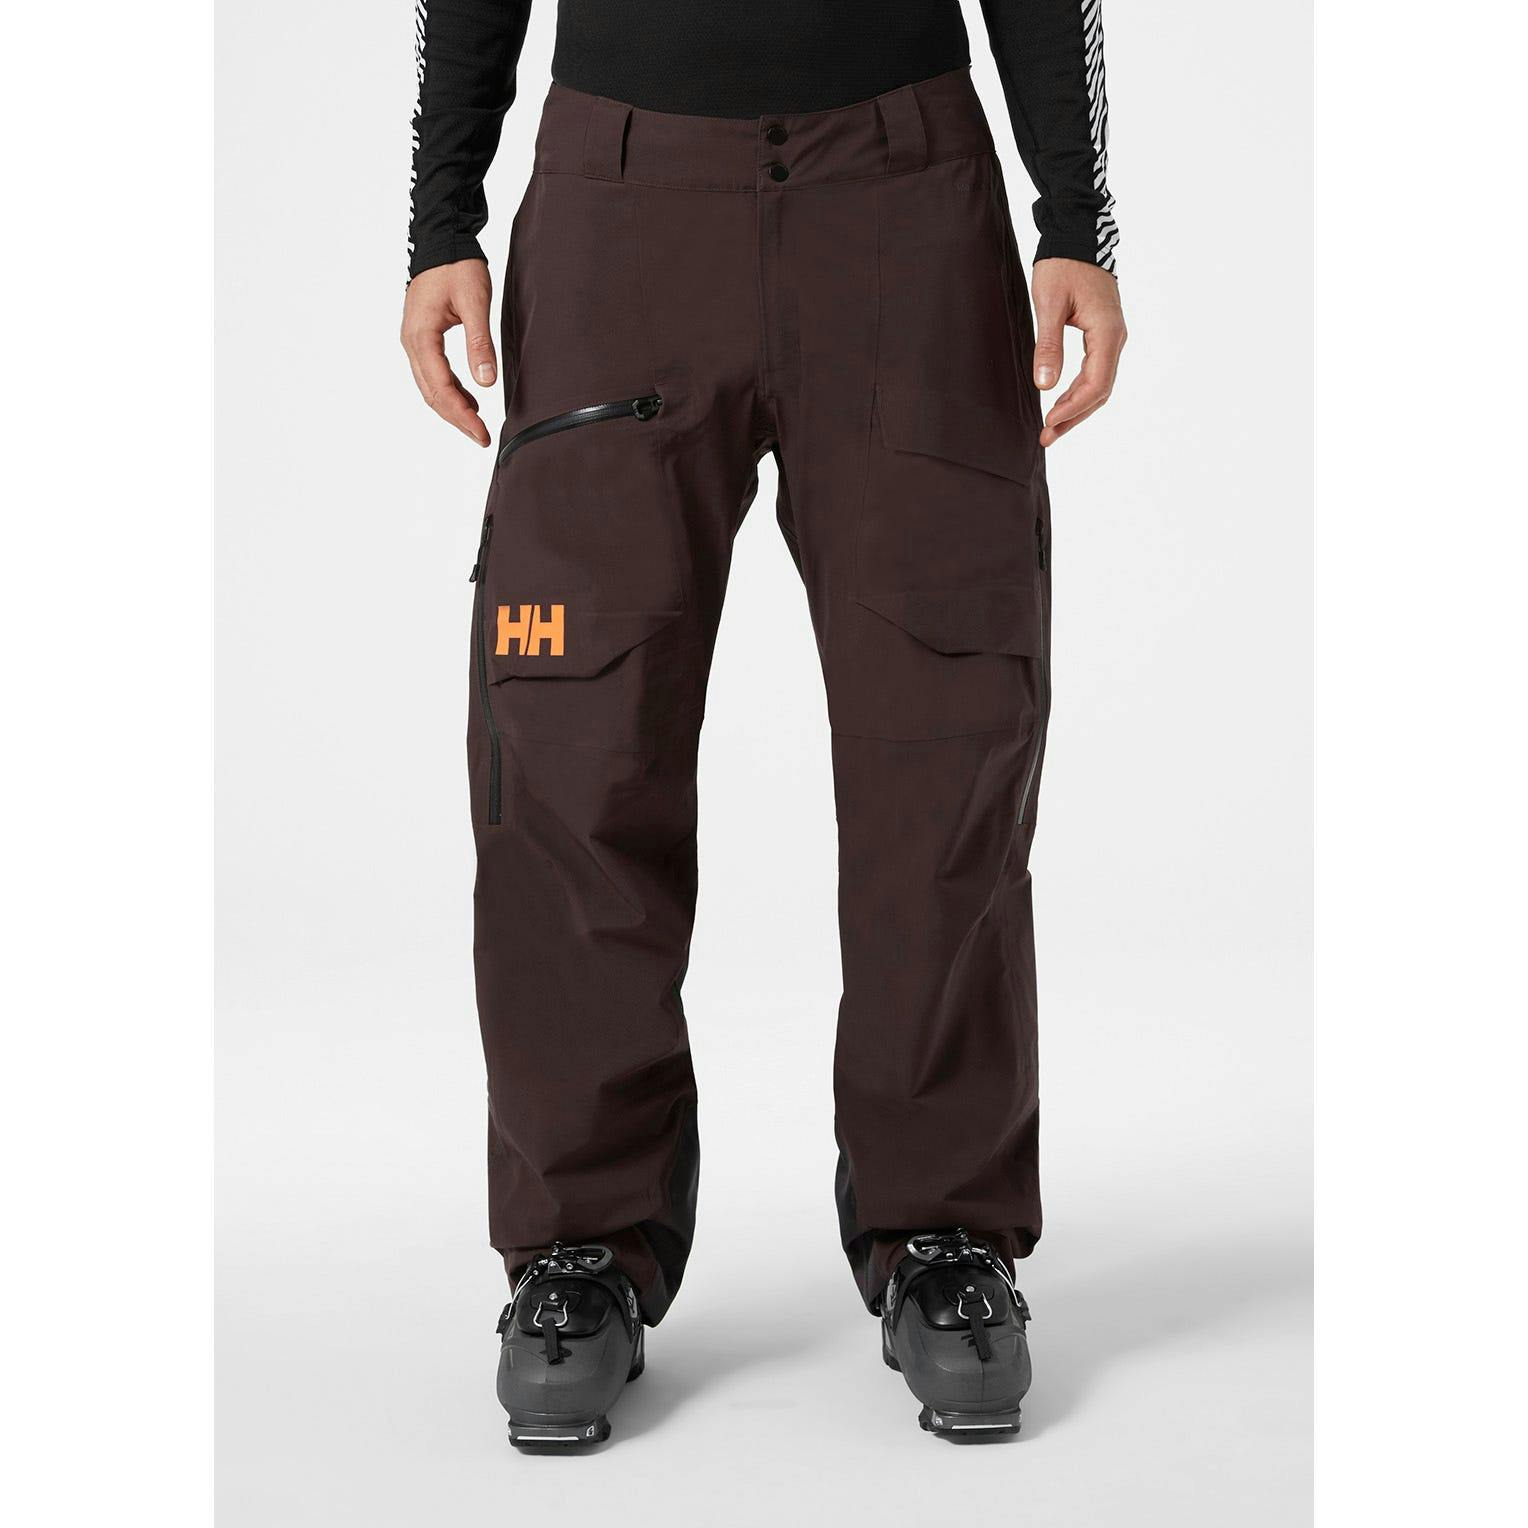 Helly Hansen Men's Ridge Infinity Shell 3L Pants